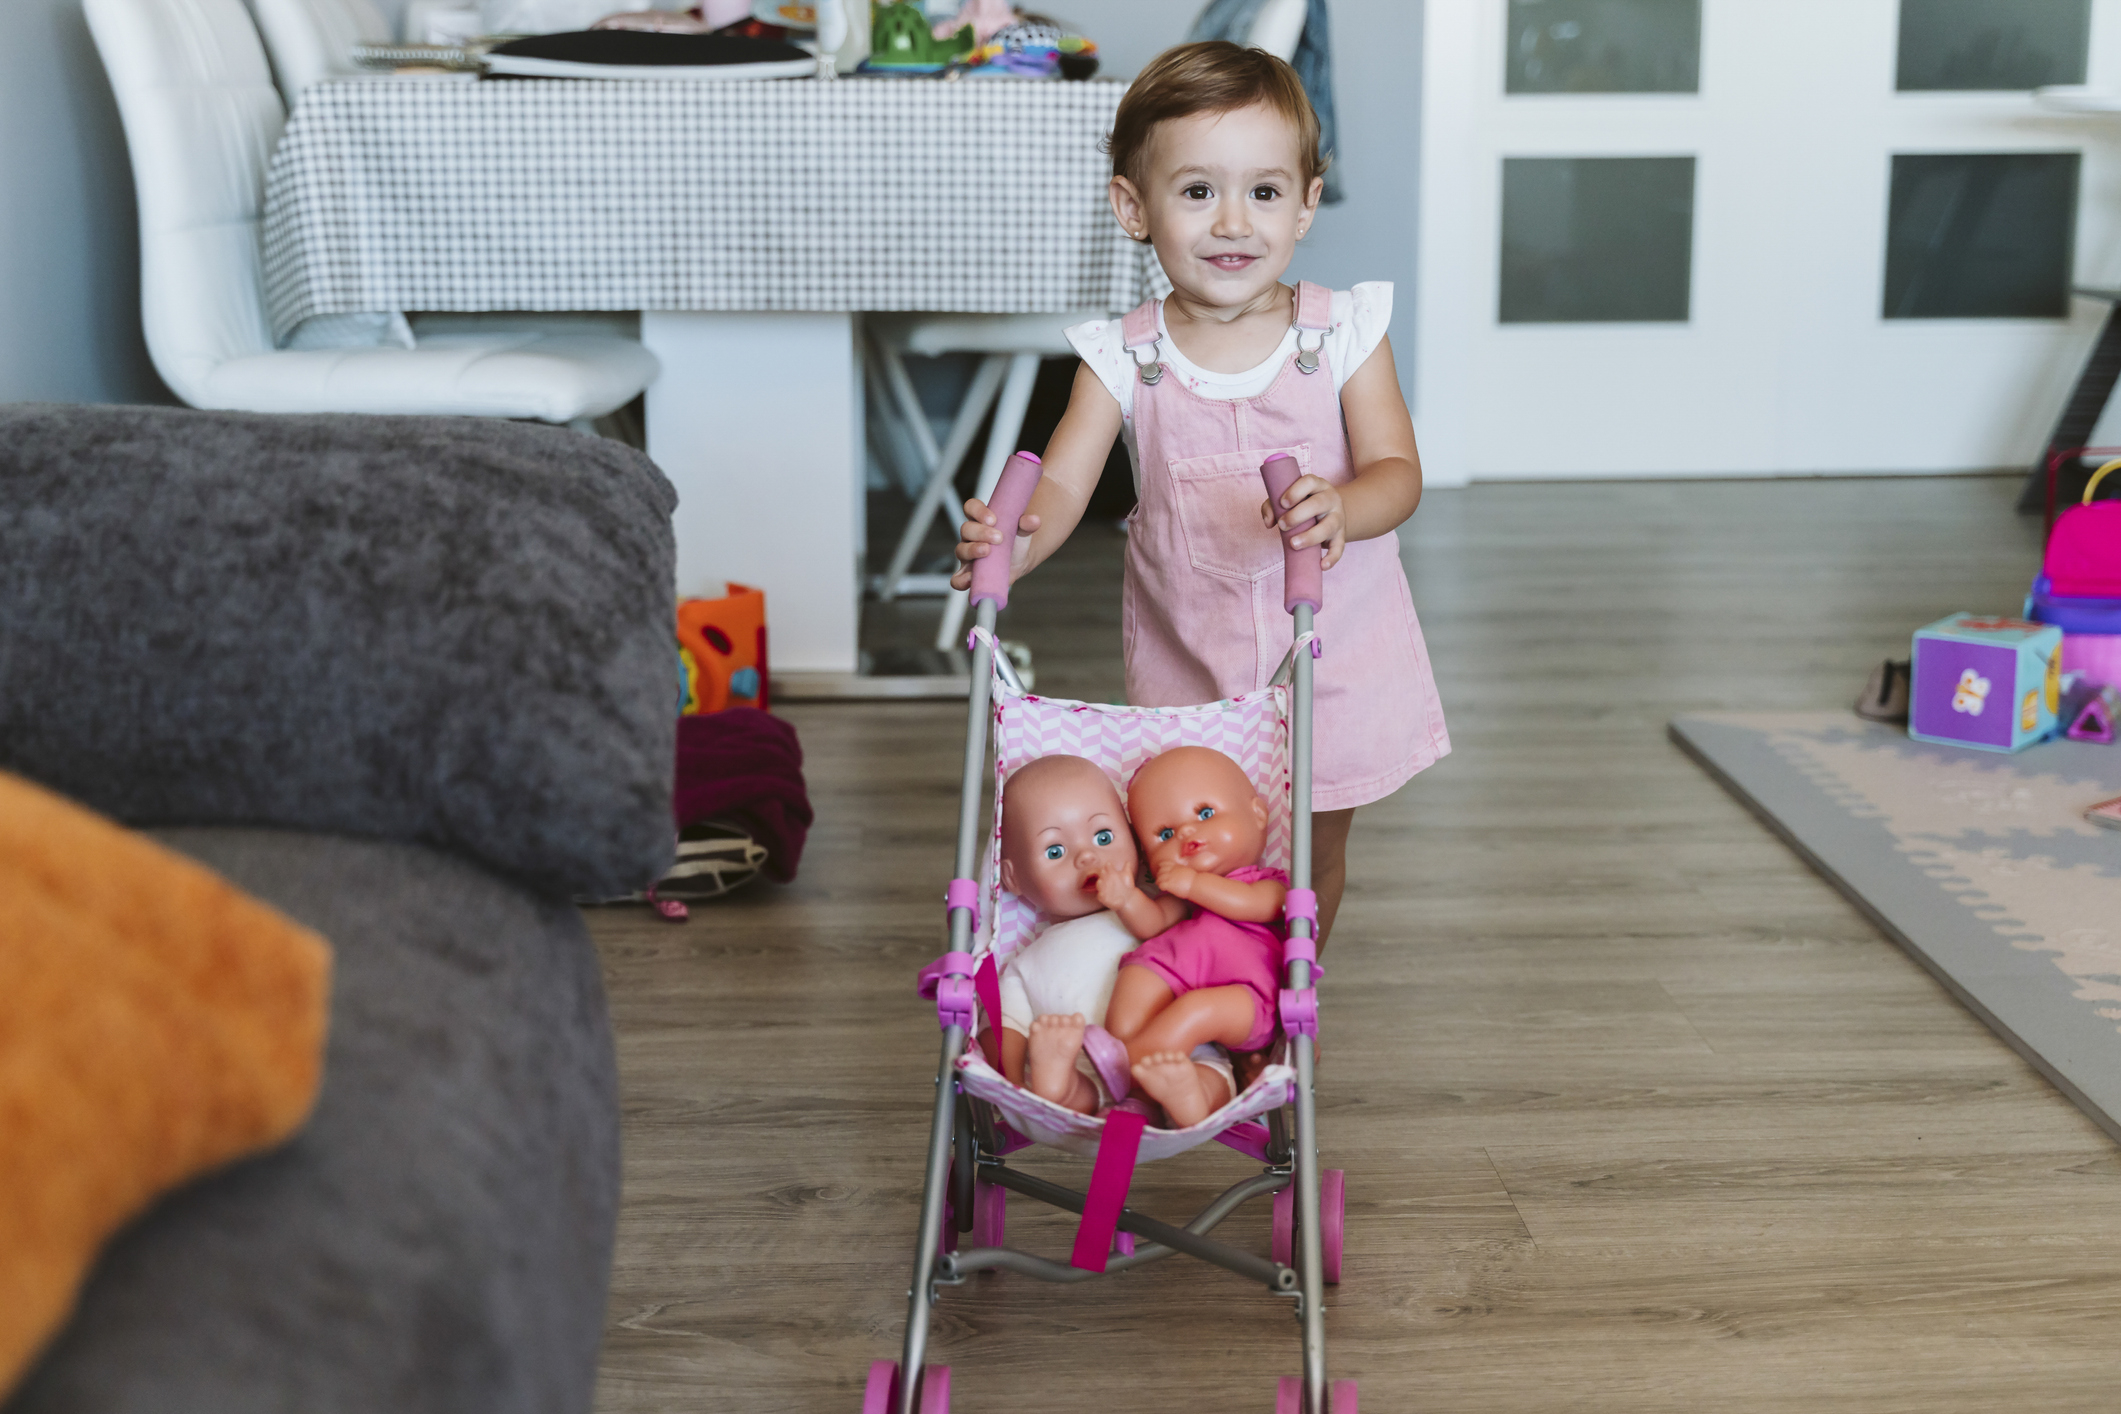 A little girl has two dolls in a stroller